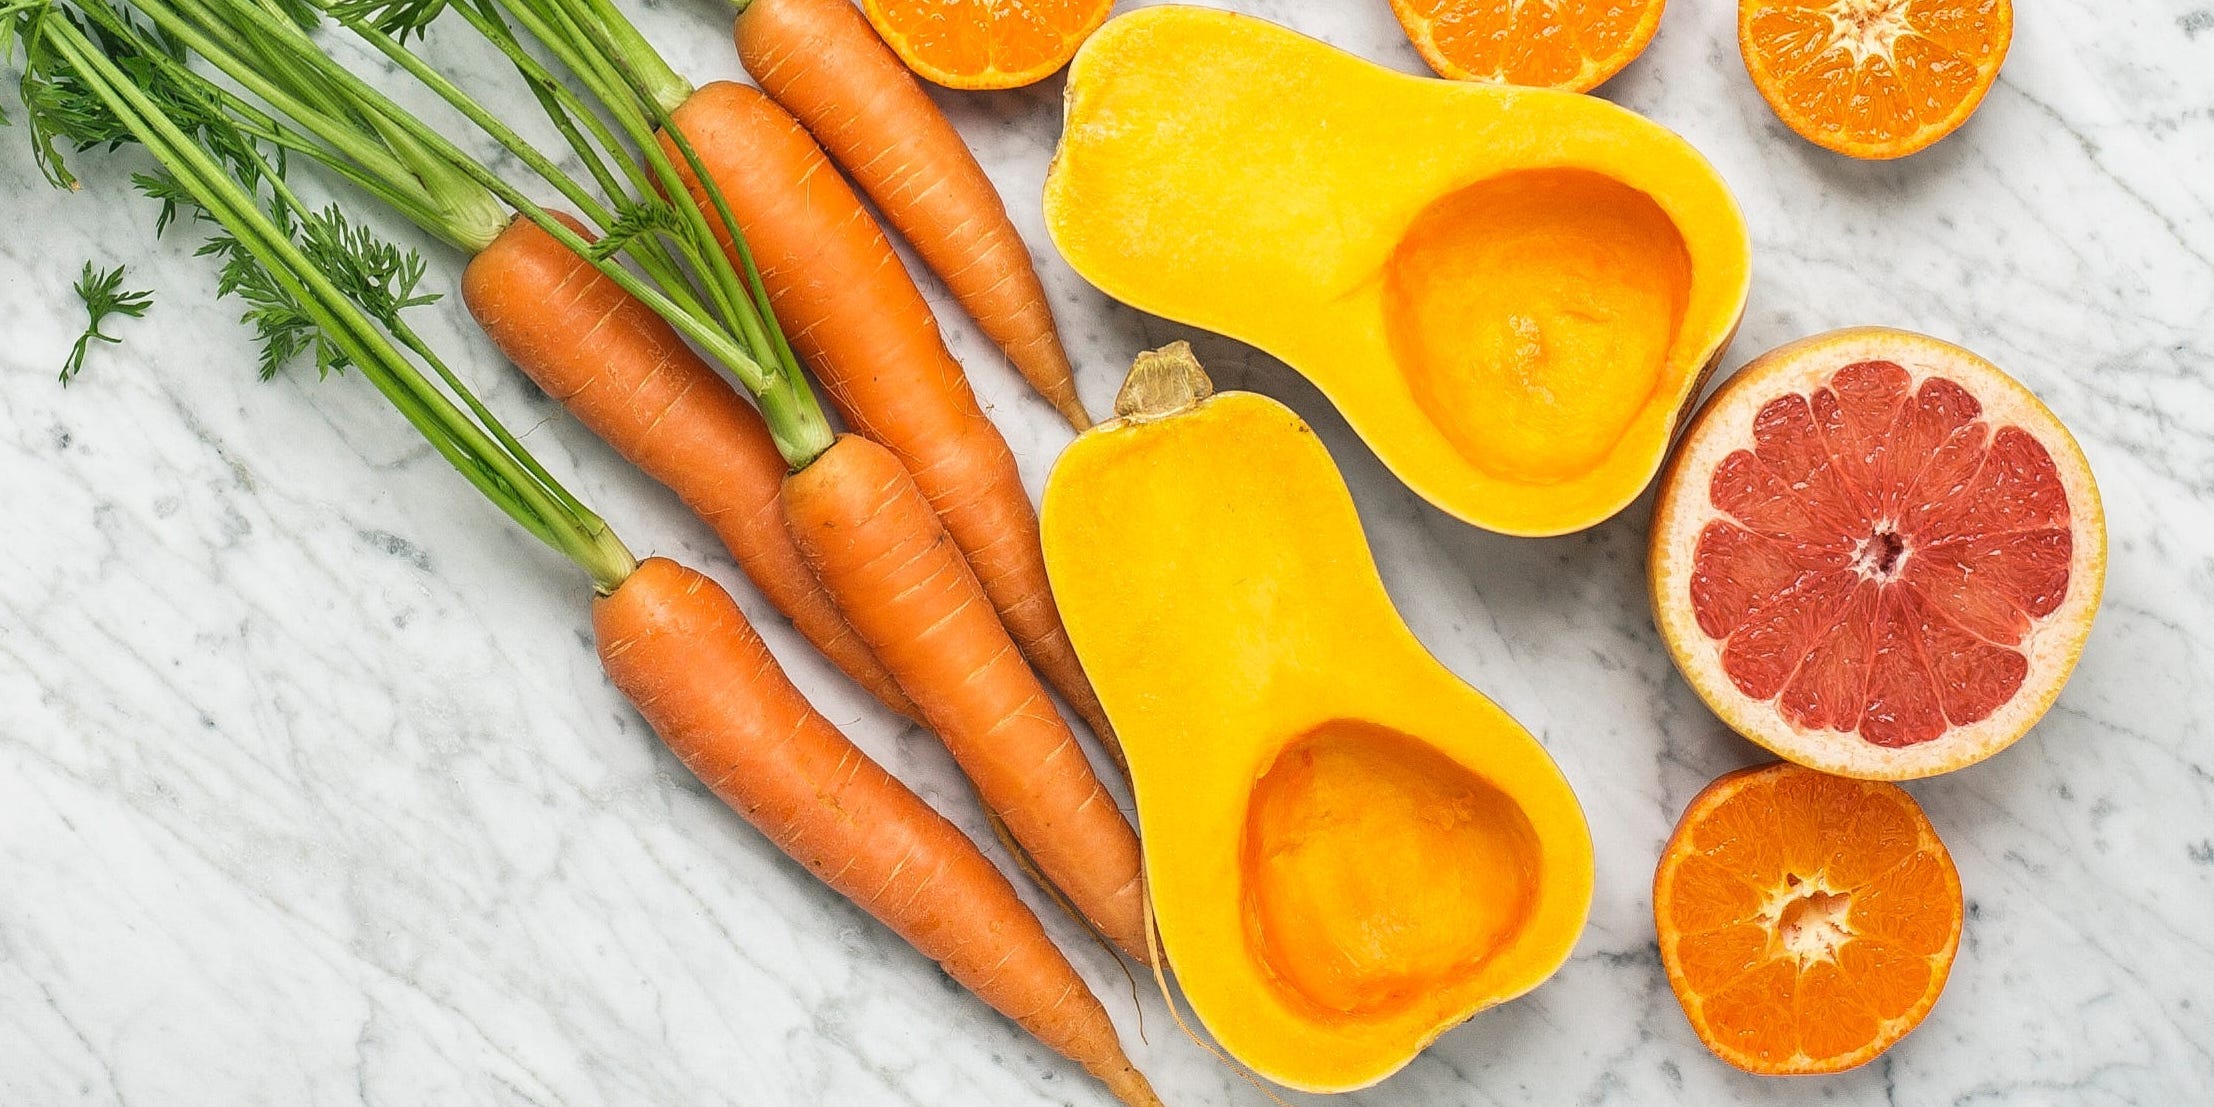 Vitamin a foods orange foods carrots